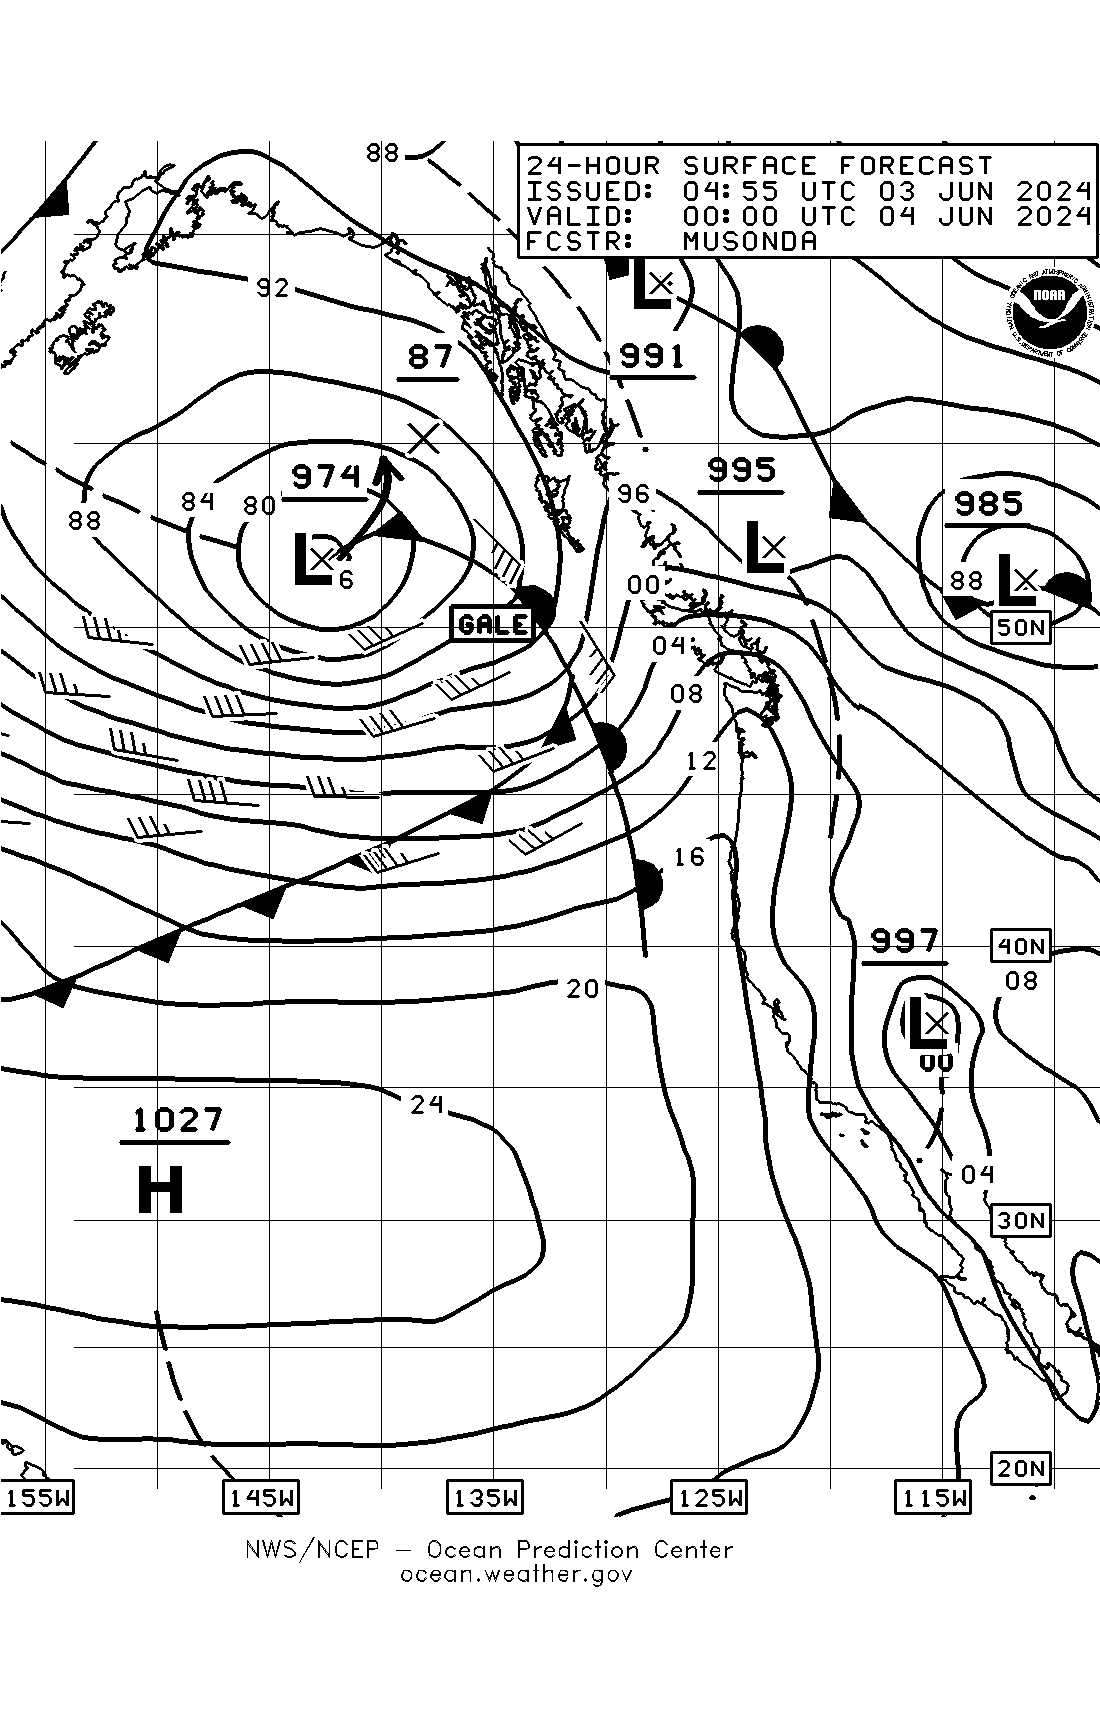 Image of Regional 24-Hour Surface Forecast